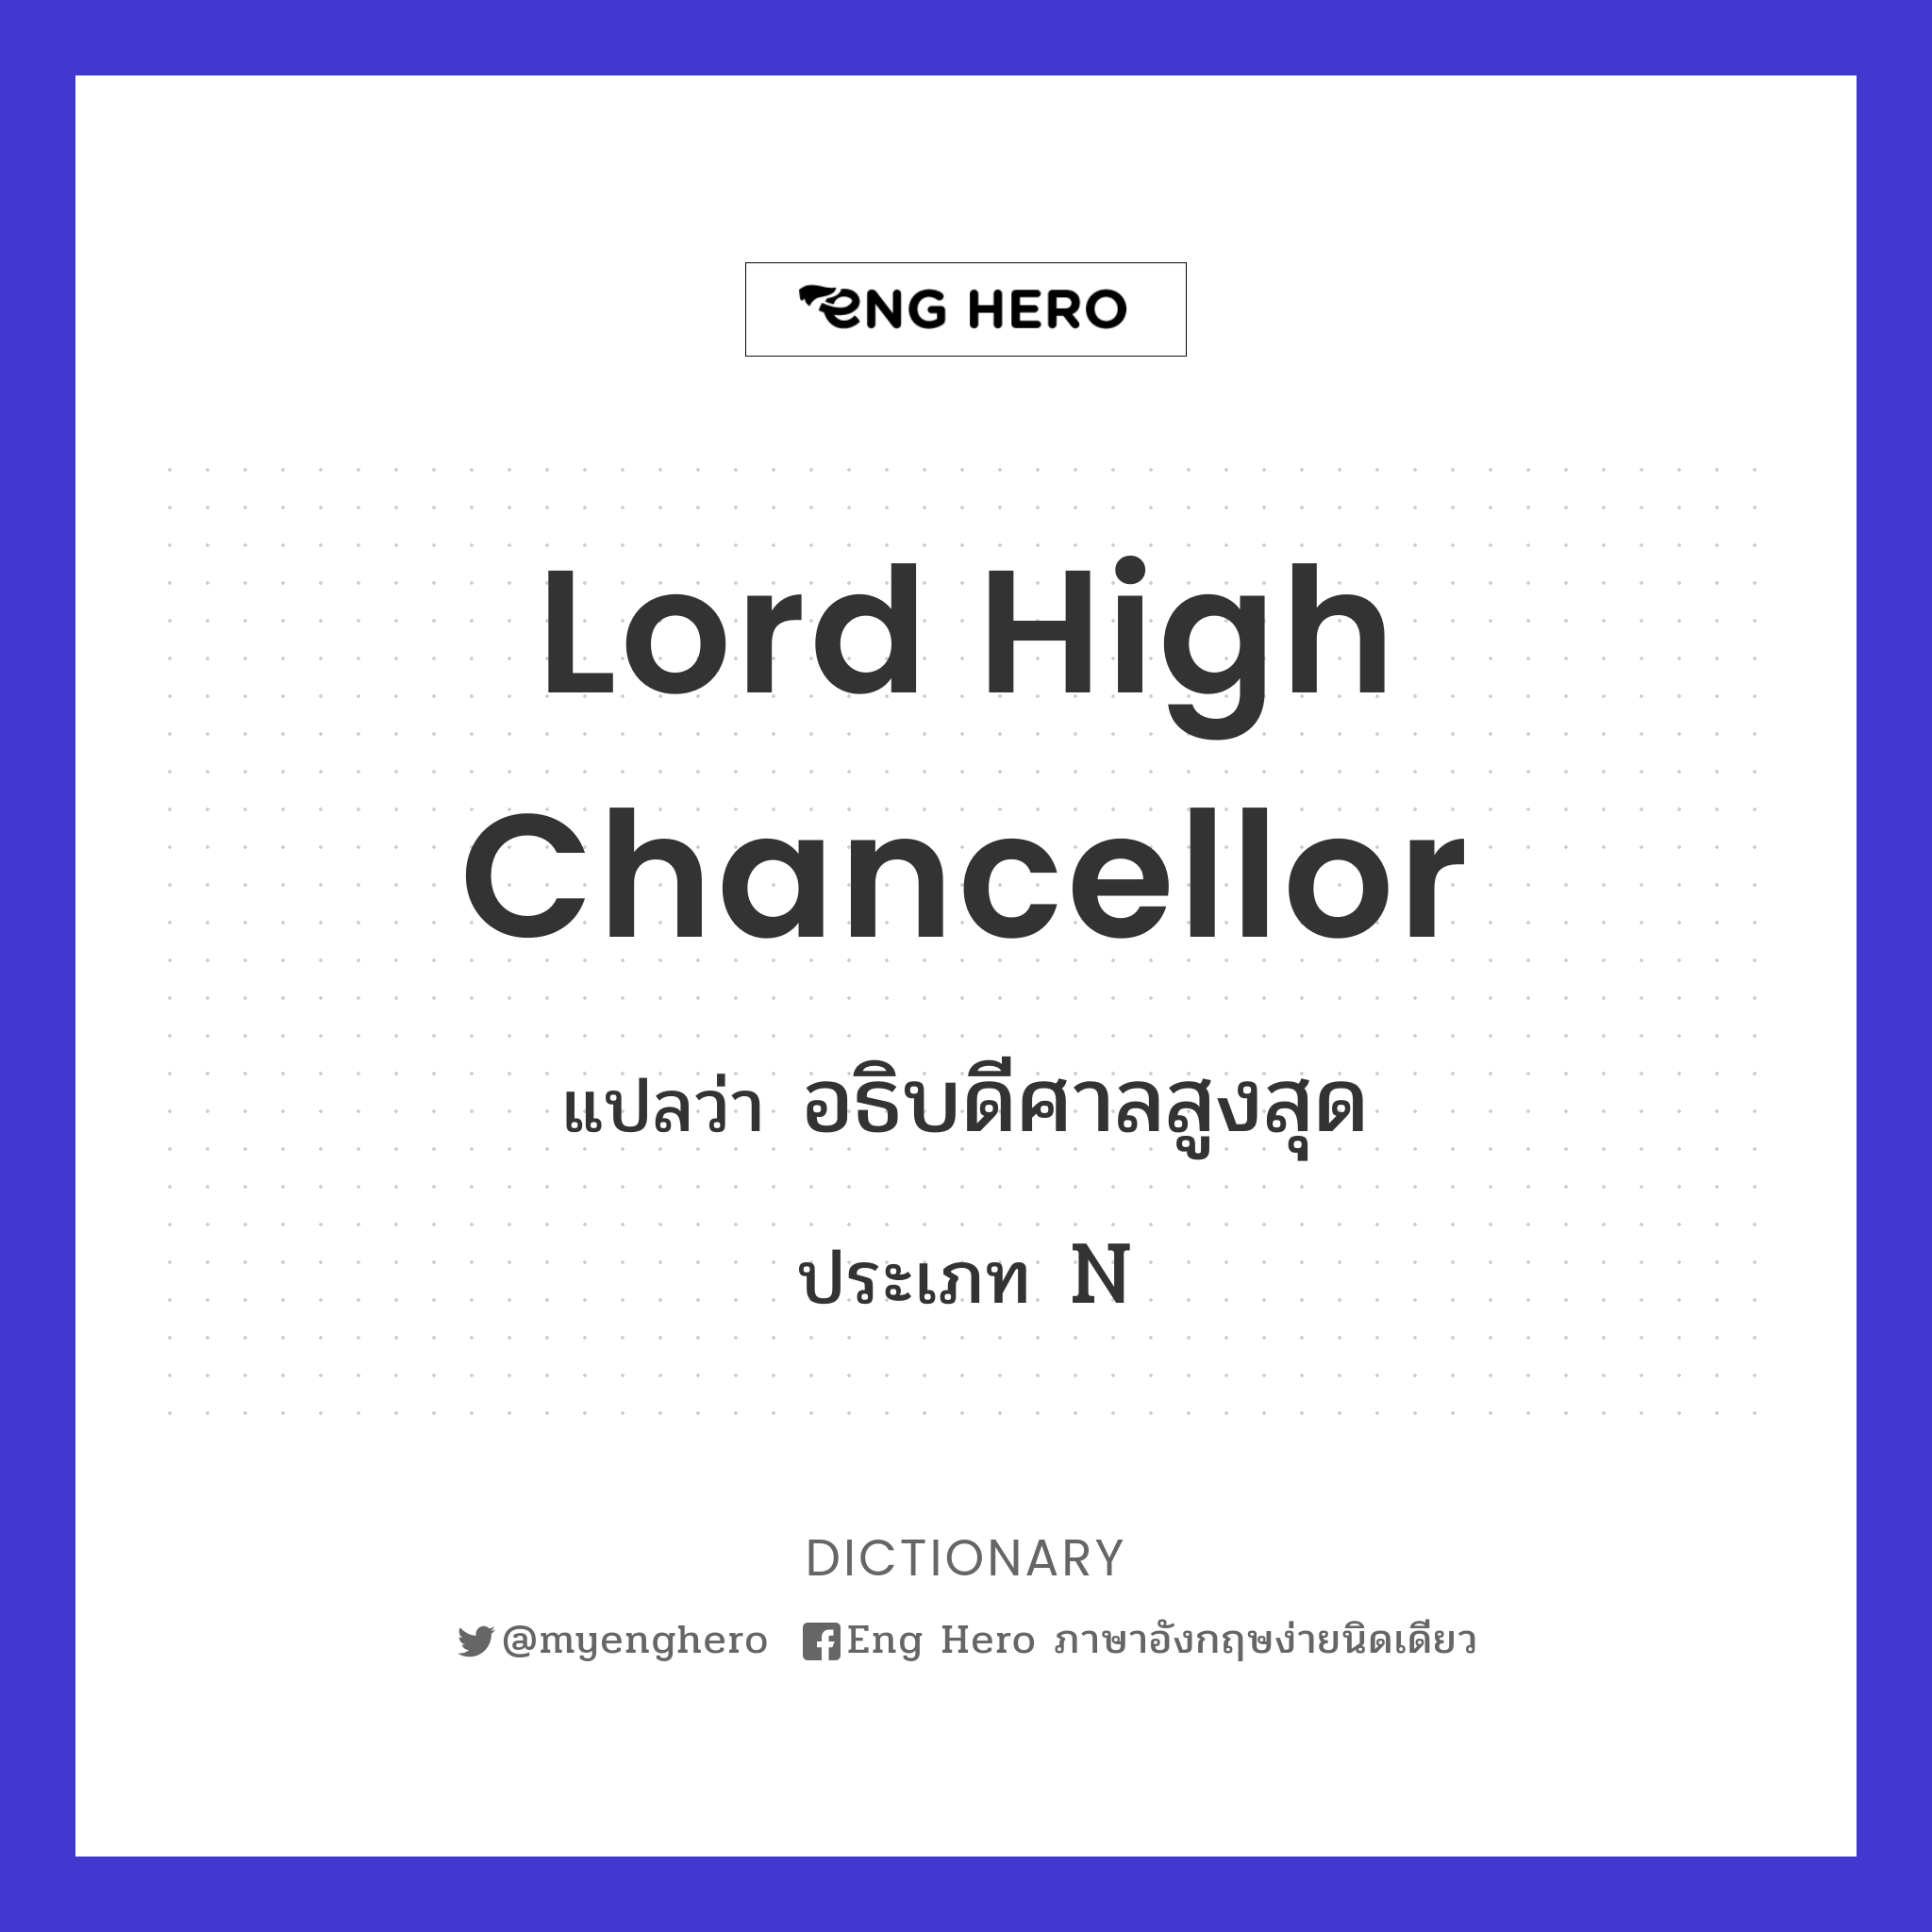 Lord High Chancellor